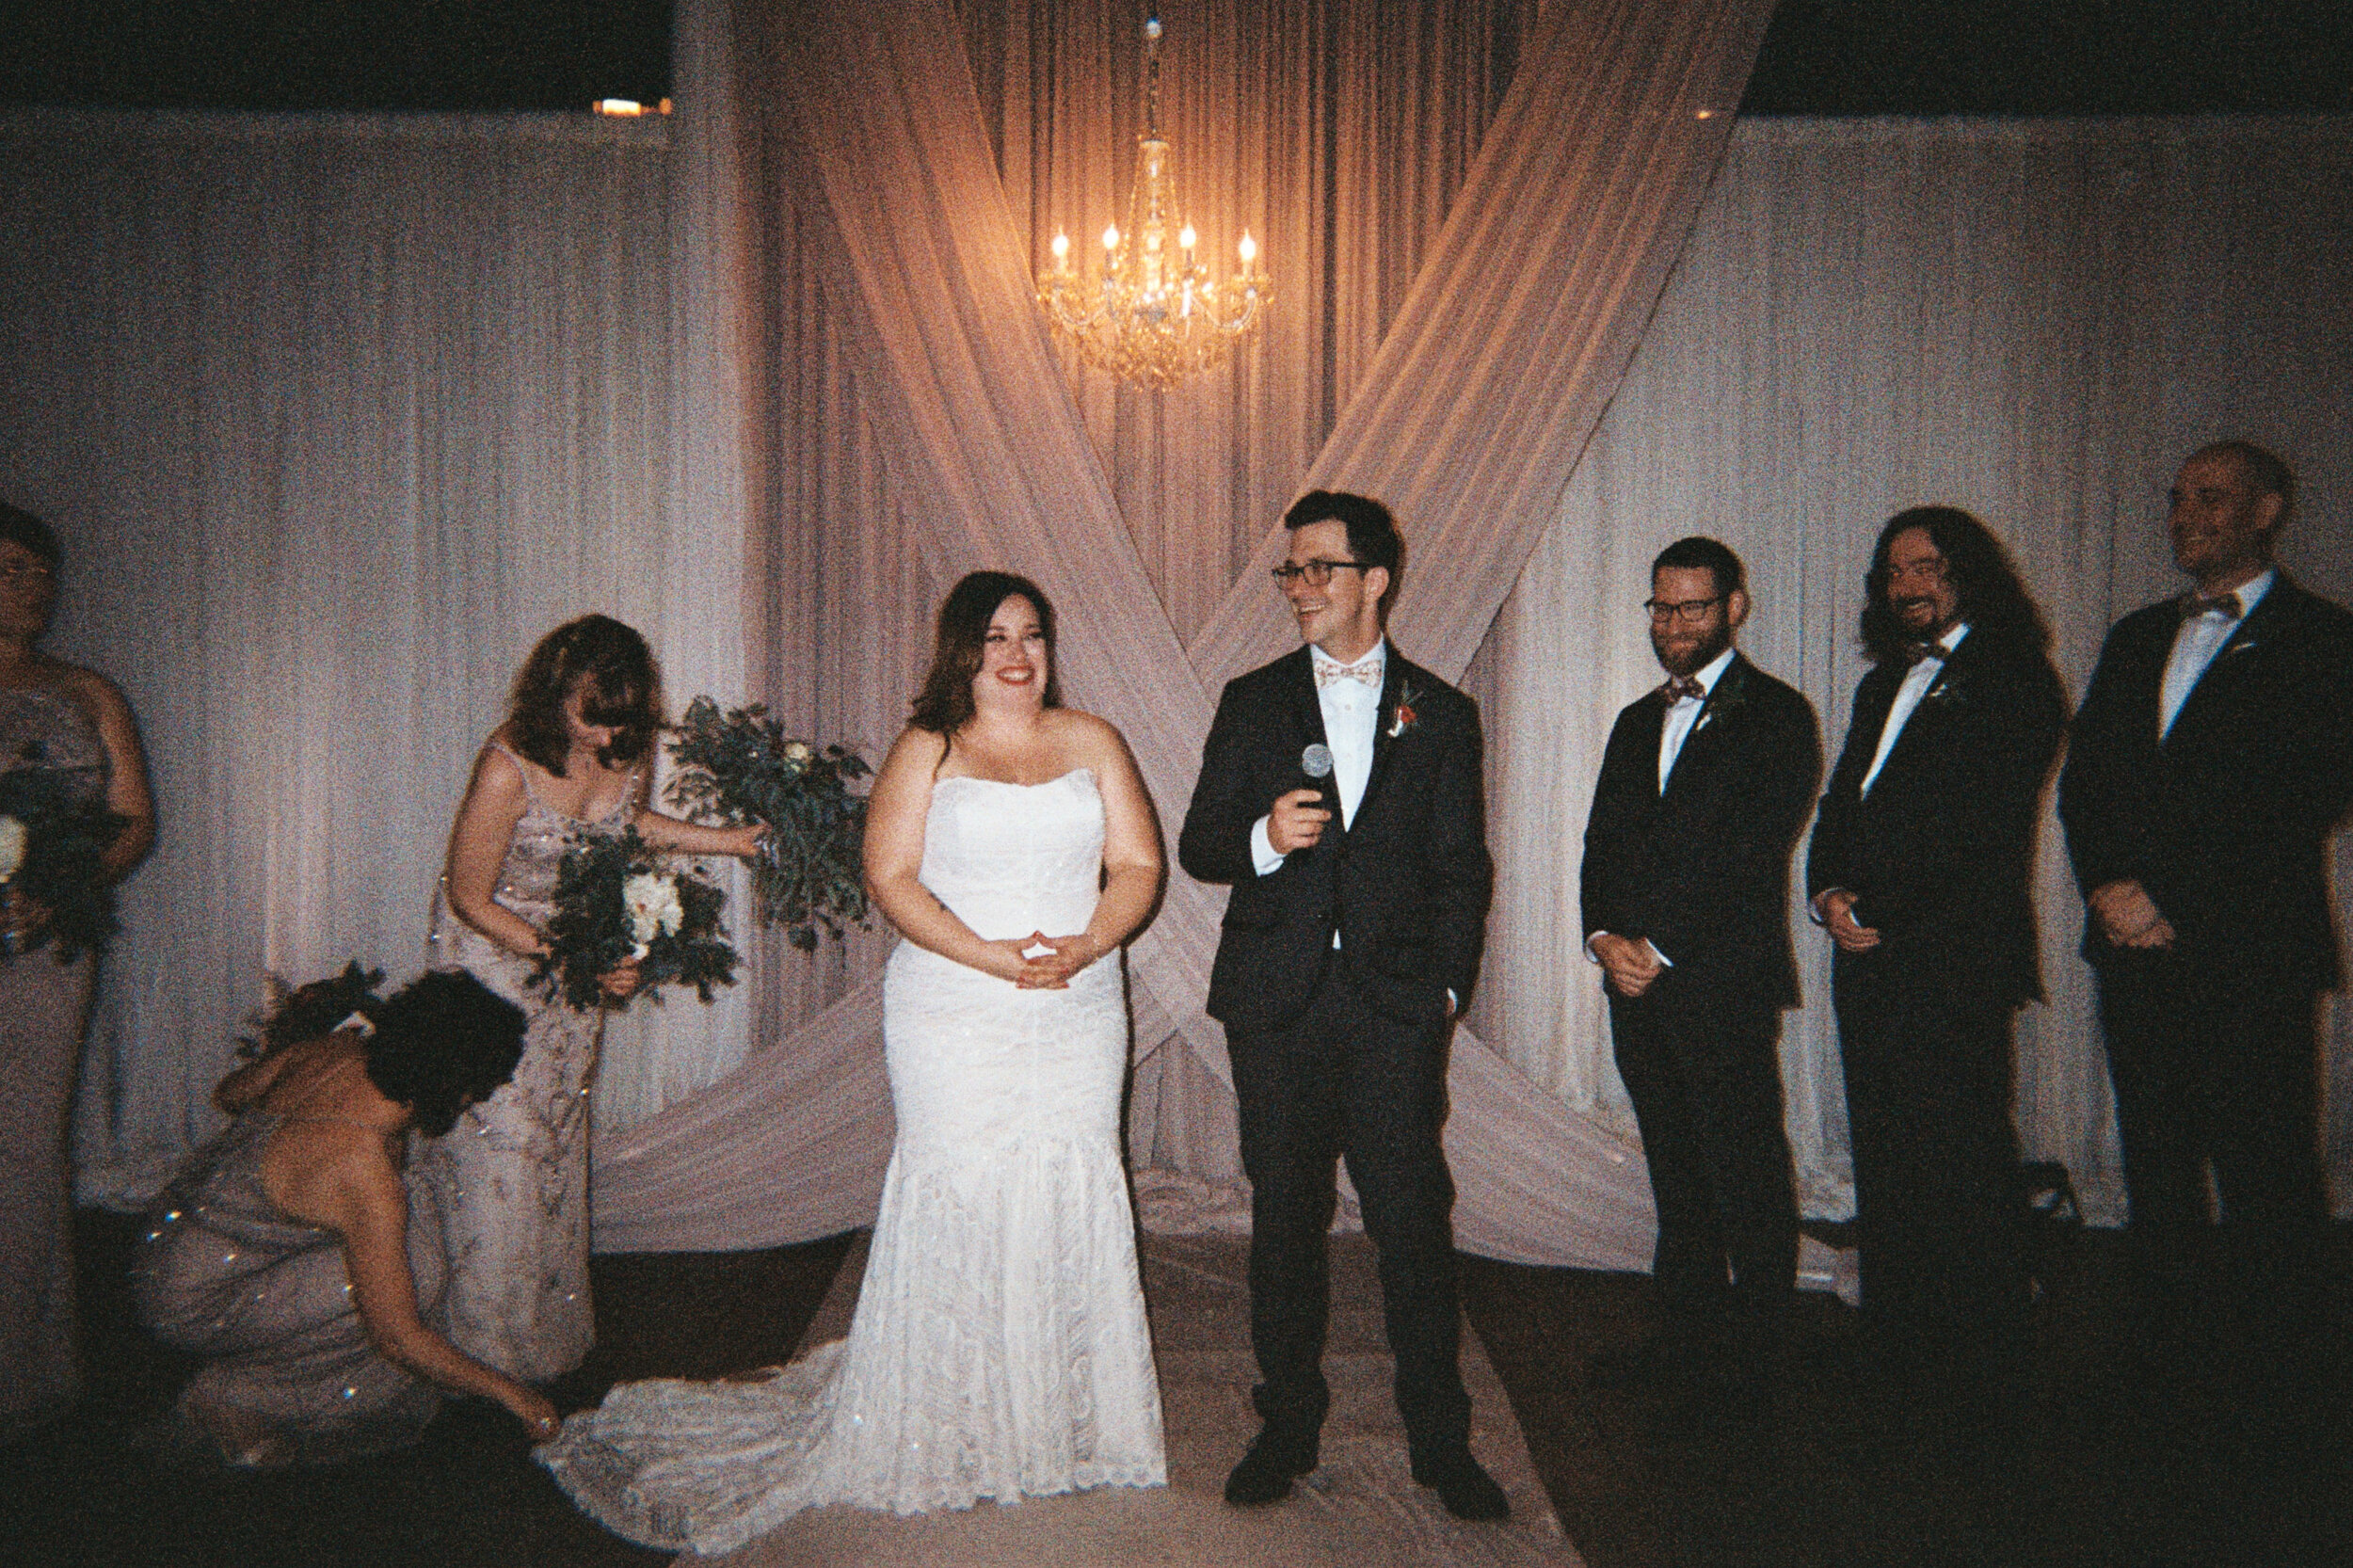 Pittsburgh NYC Film Wedding Photographer - Rat Lab - Lawrenceville - Stephanie Dave170.jpg